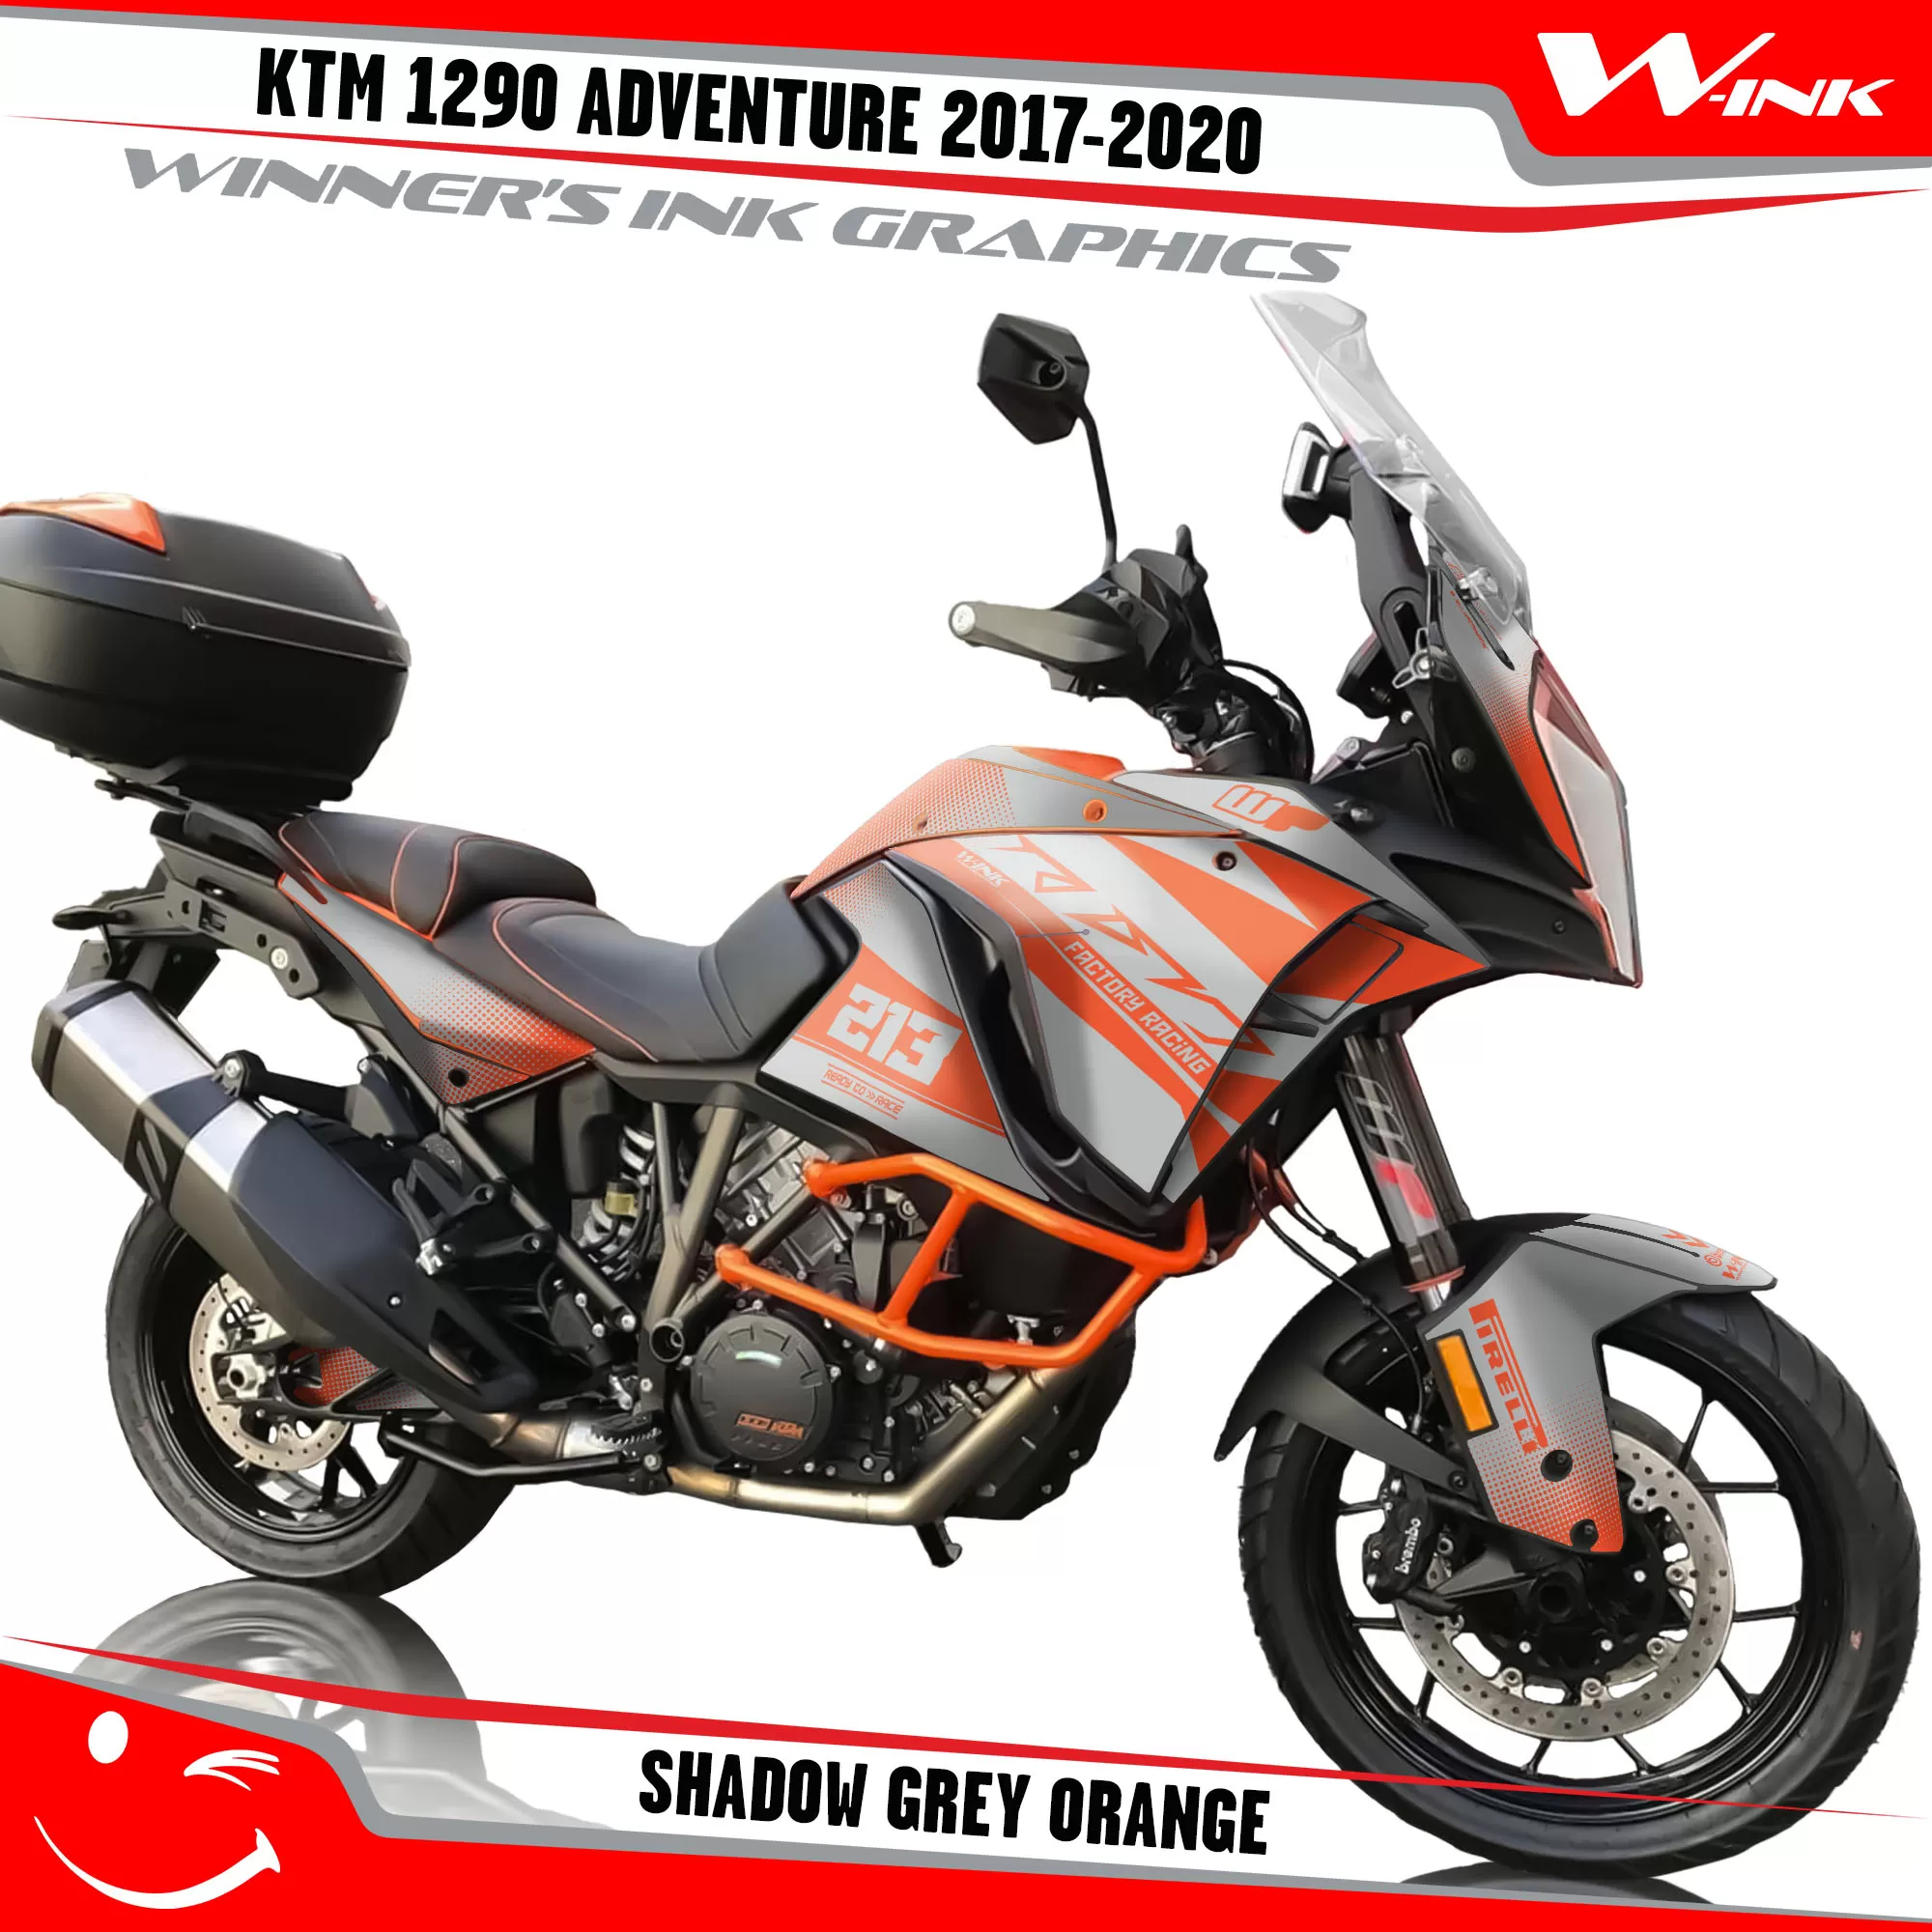 KTM-Adventure-1290-2017-2018-2019-2020-graphics-kit-and-decals-Shadow-Grey-Orange